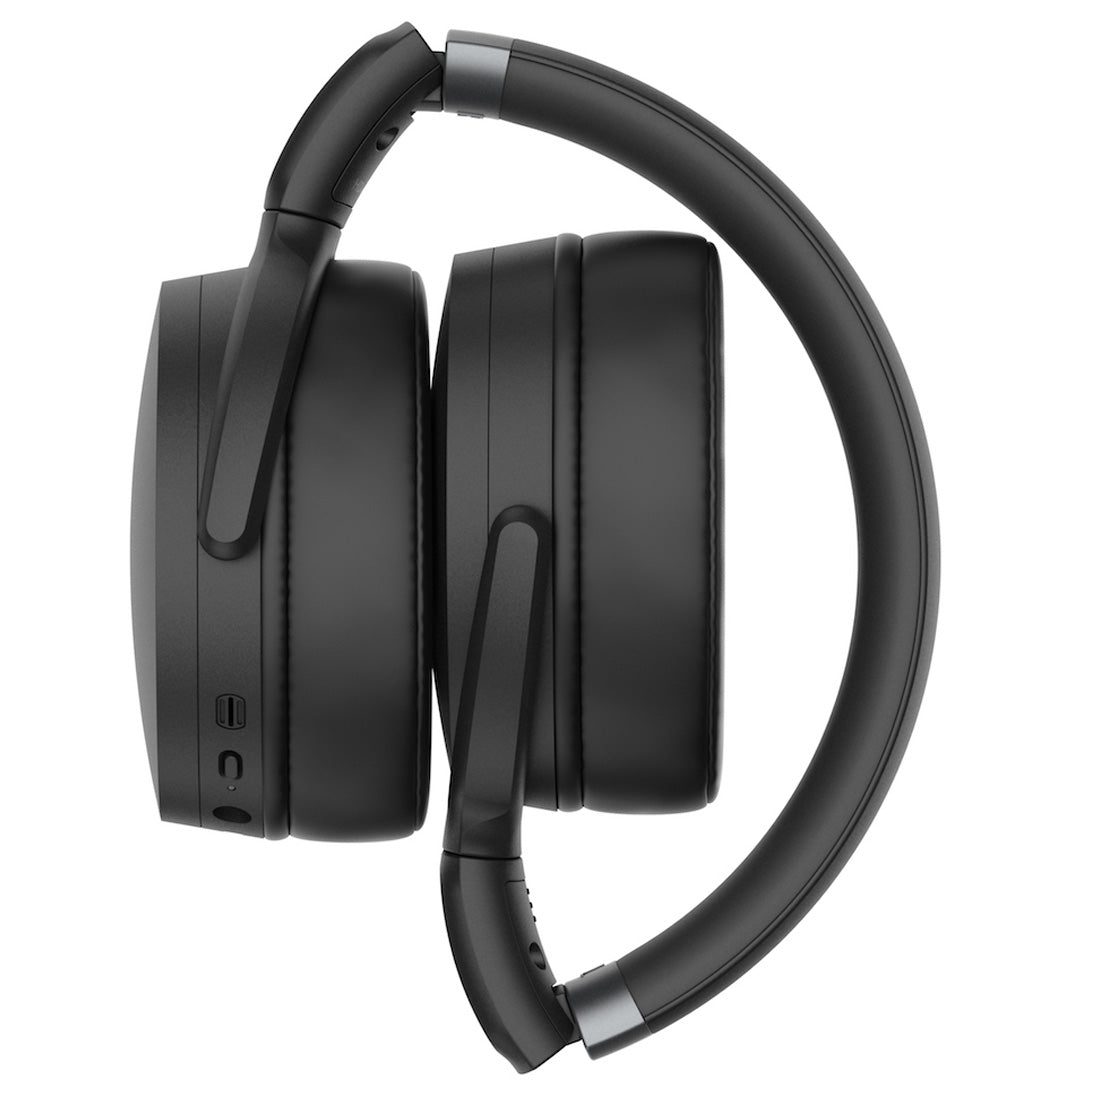 Sennheiser HD 450BT Bluetooth Noise Cancelling Headphones - Black